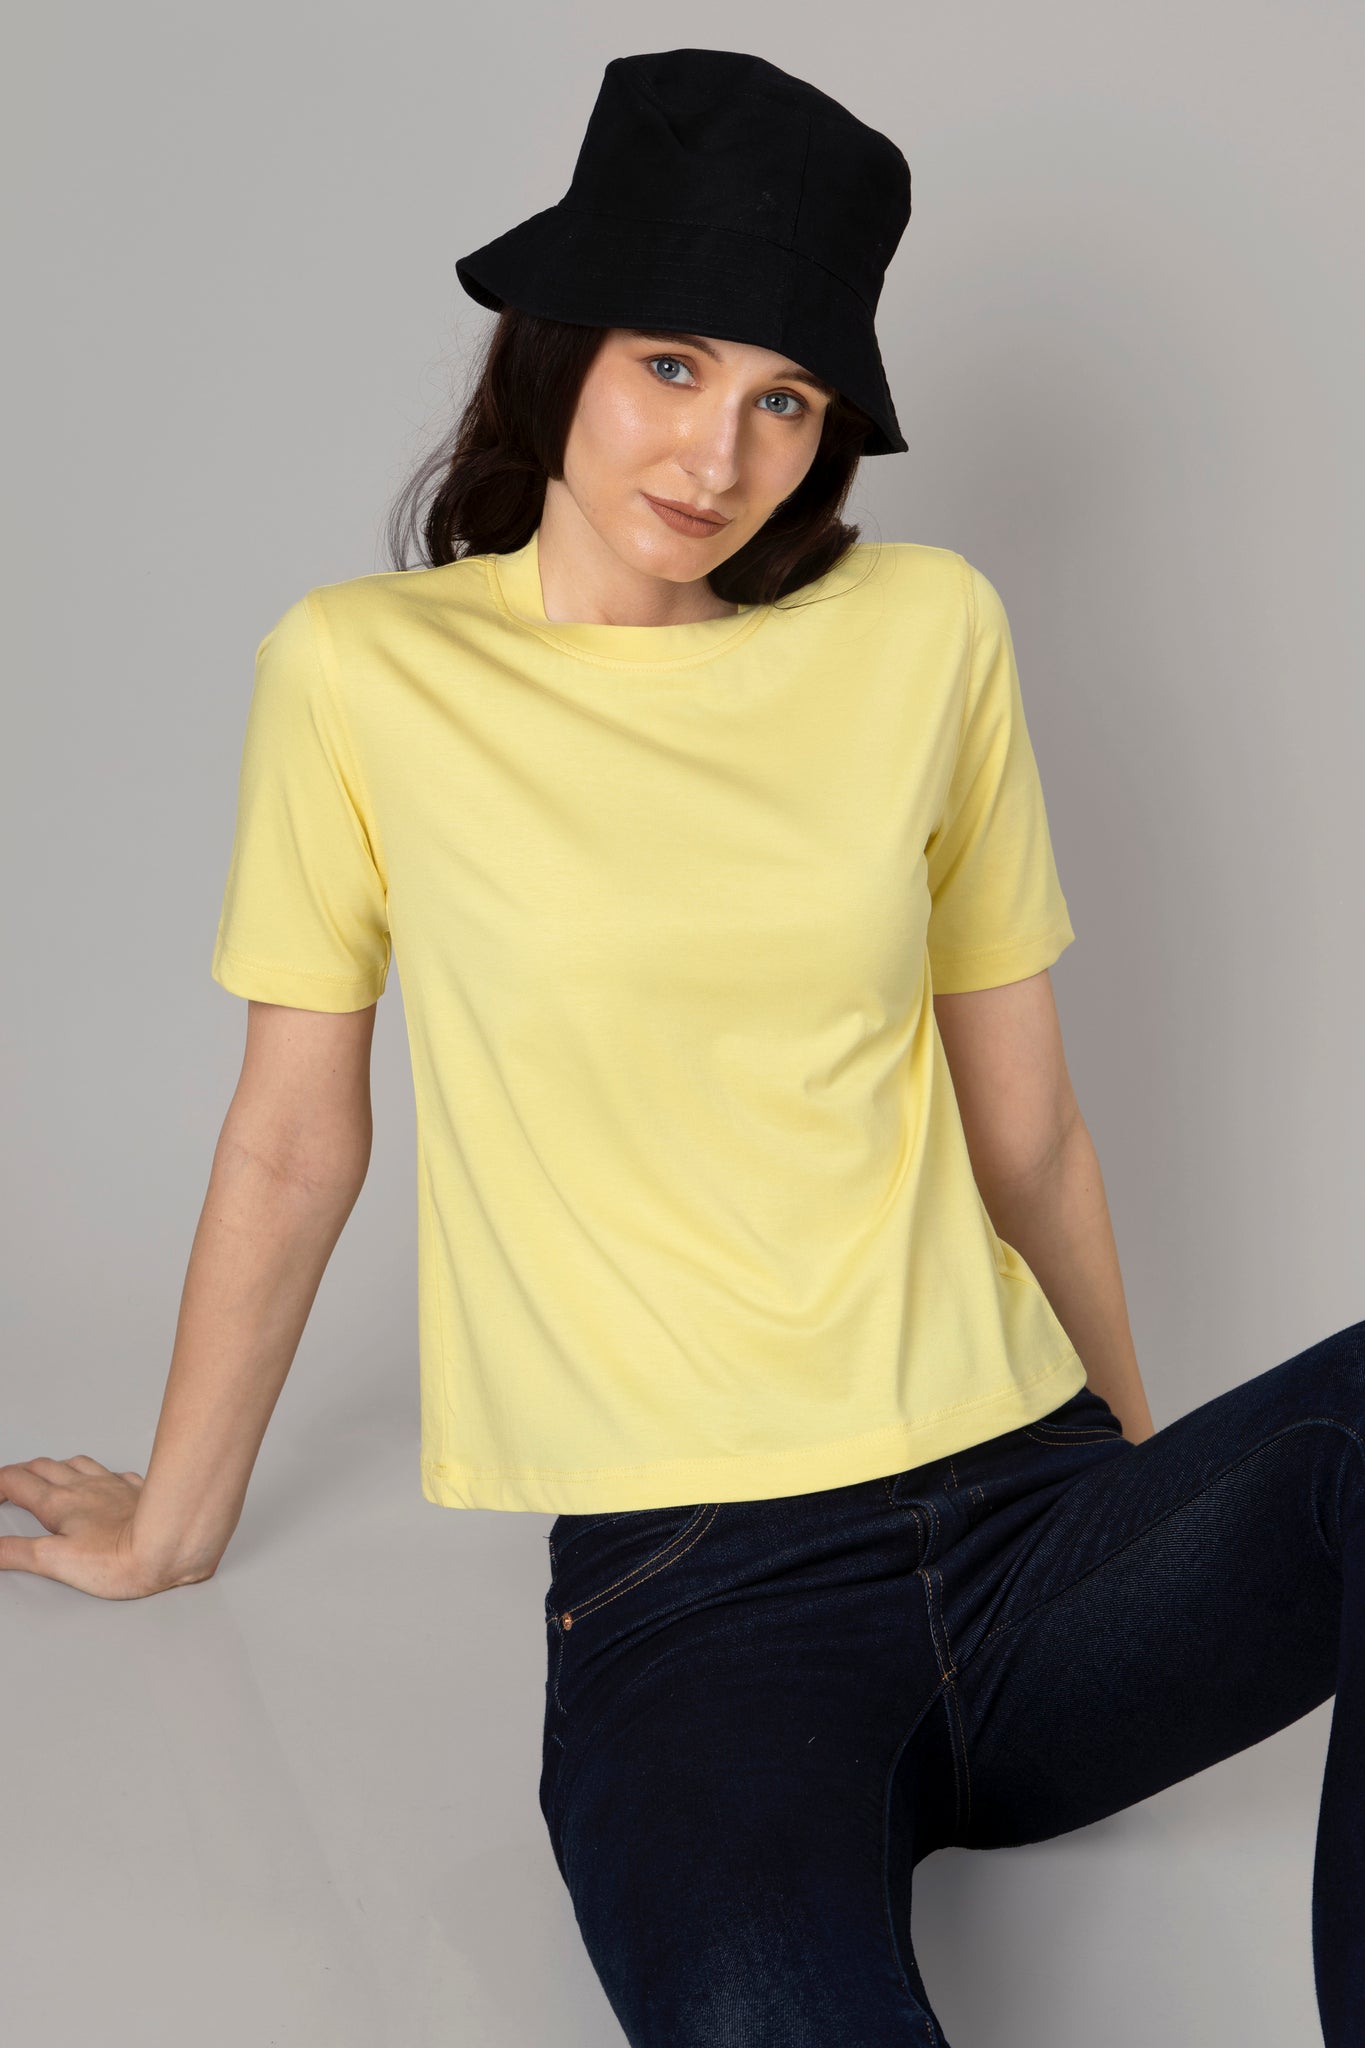 Women's Short Sleeve T-Shirt for Casual Comfort